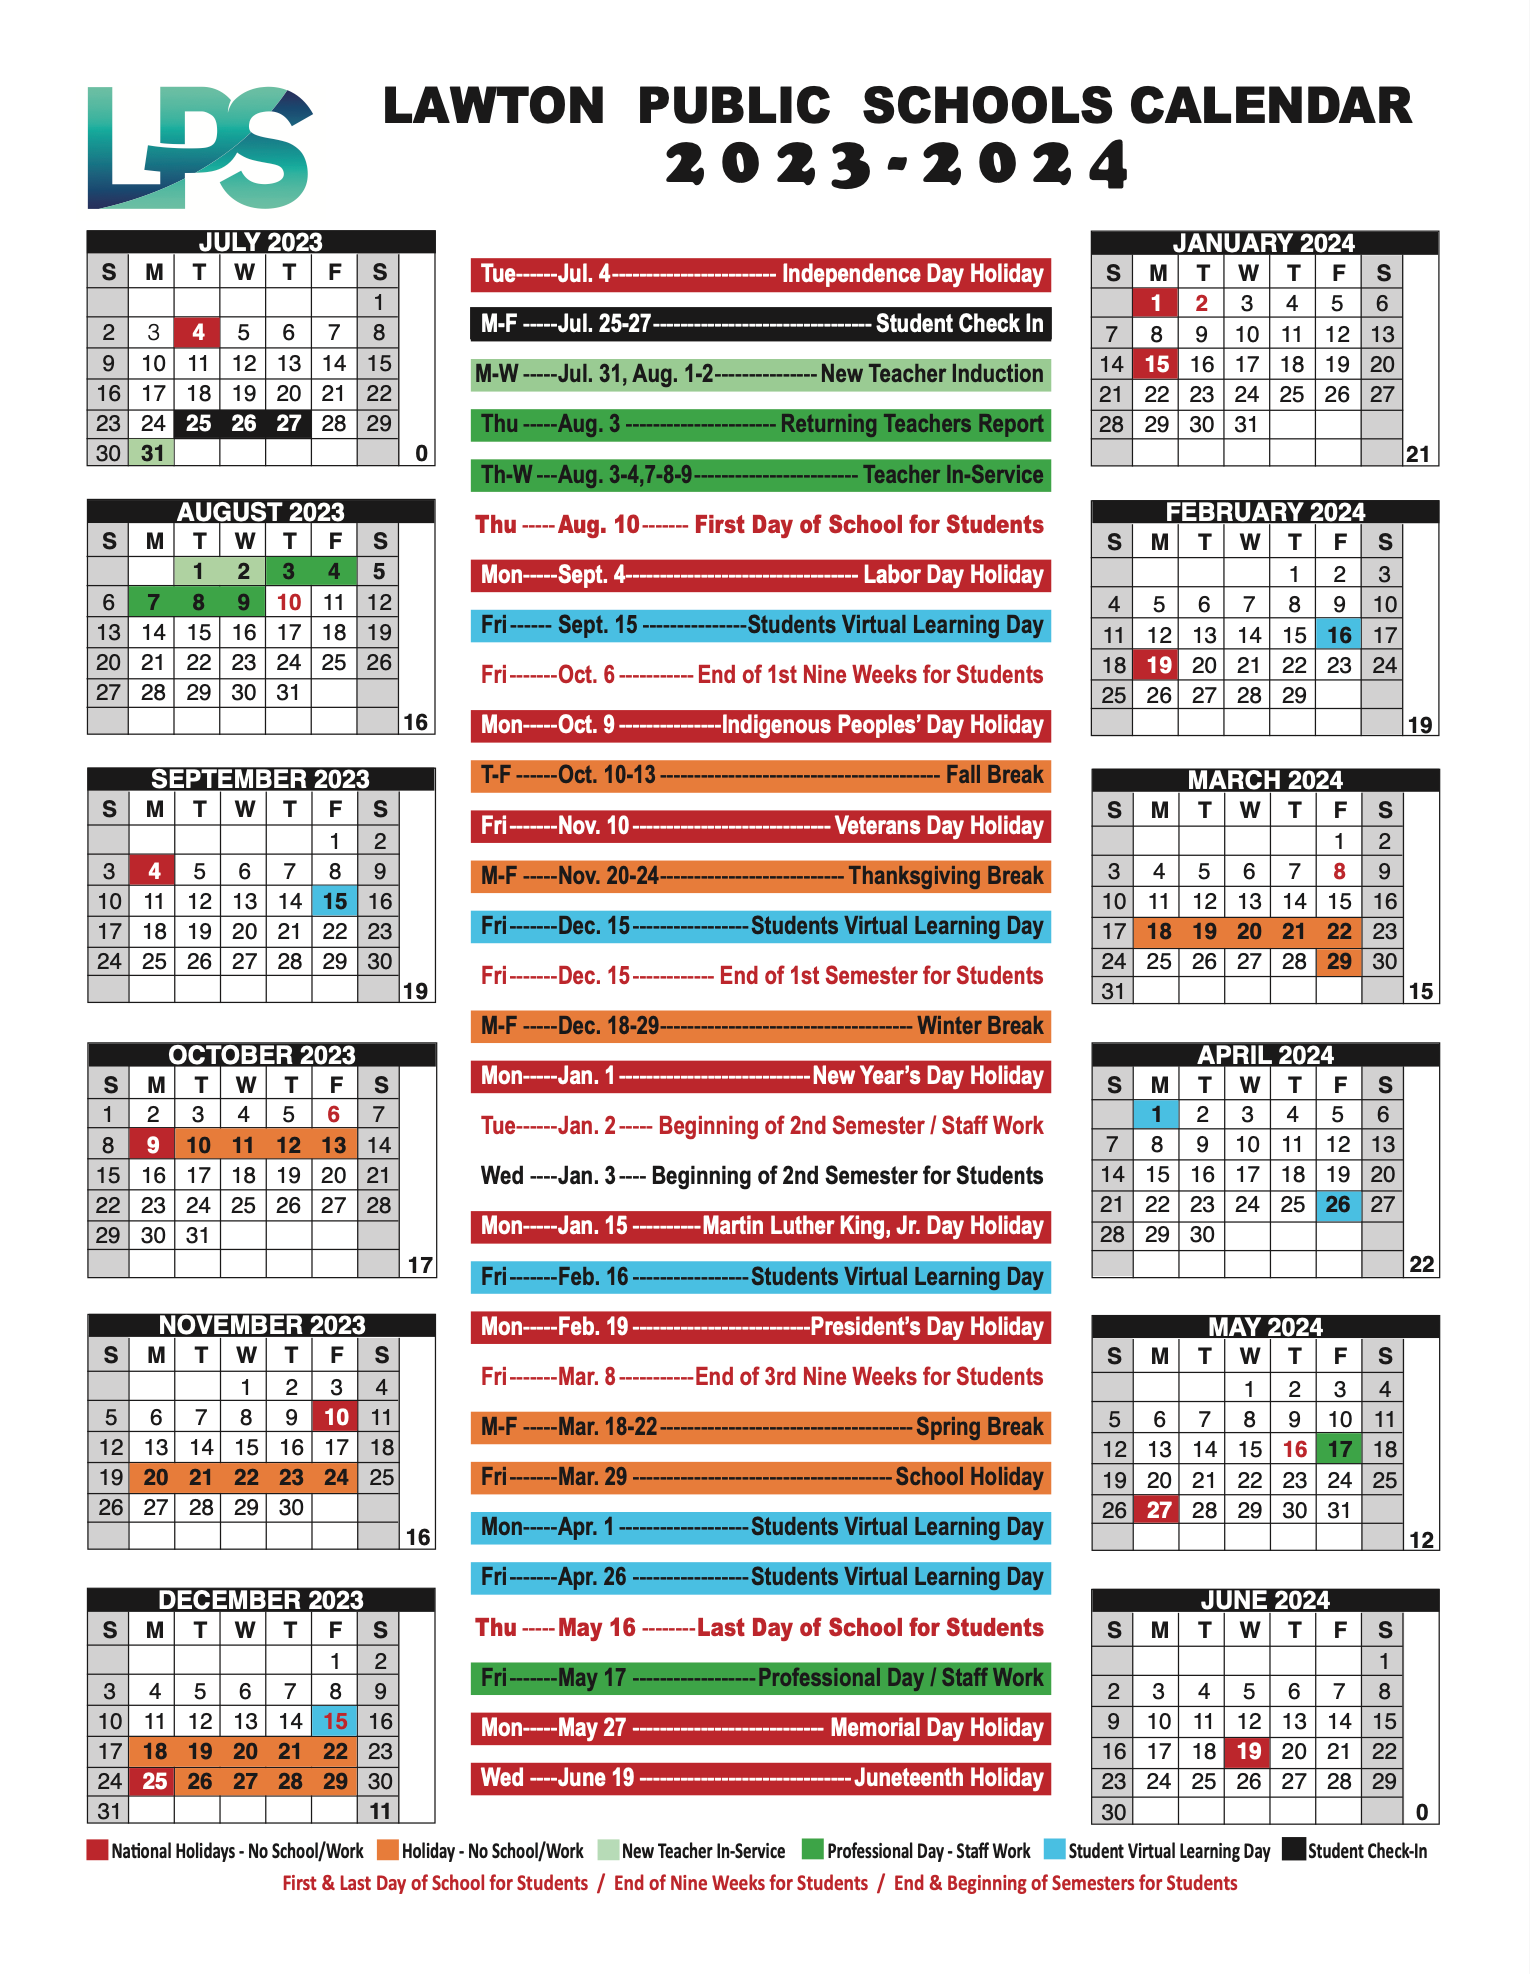 LPS Calendar Revised